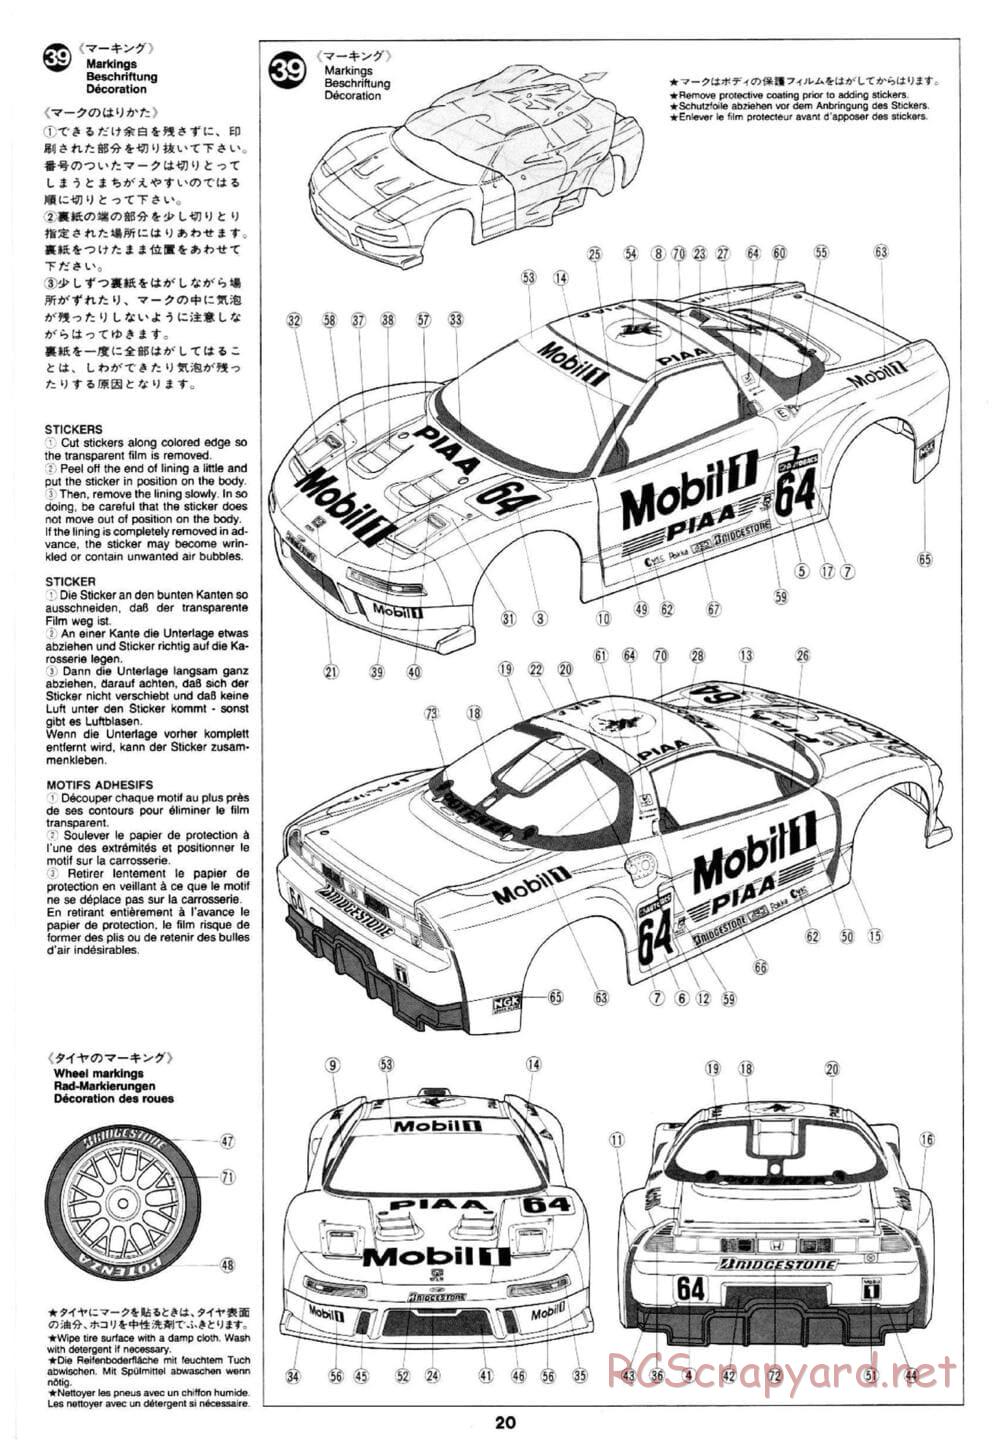 Tamiya - Mobil 1 NSX - TA-03R Chassis - Manual - Page 20